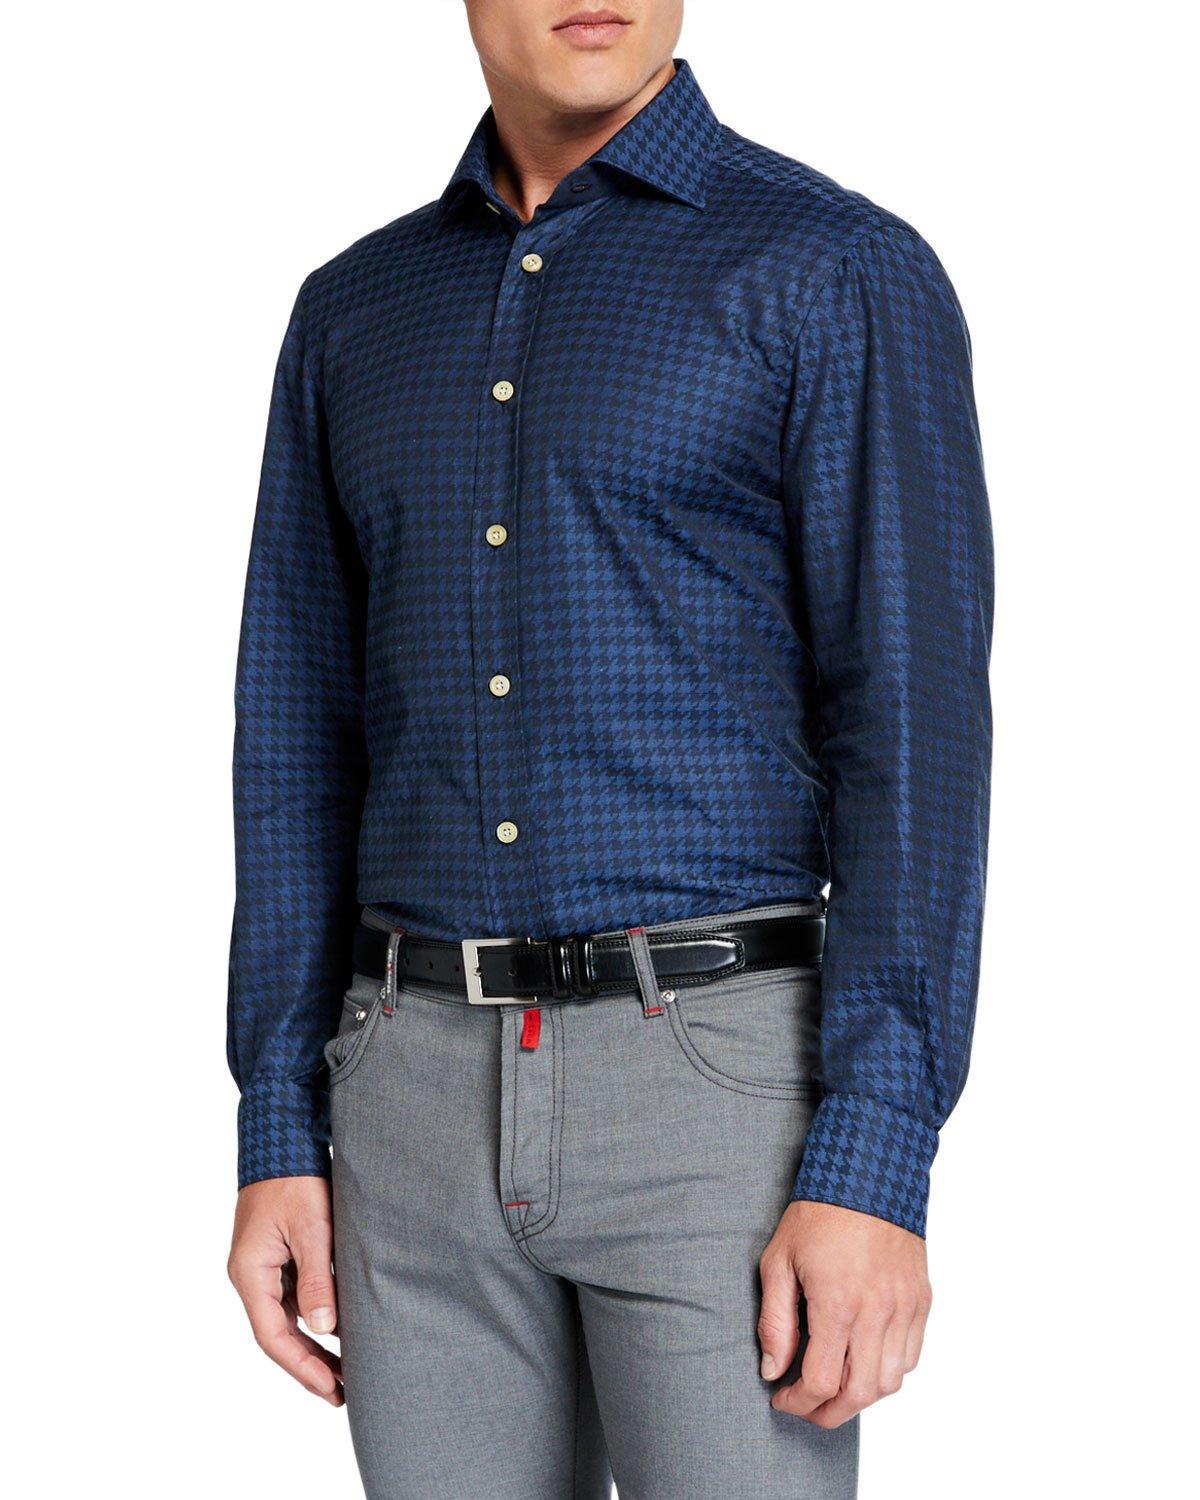 Kiton Cotton Men's Houndstooth Sport Shirt in Blue for Men - Lyst